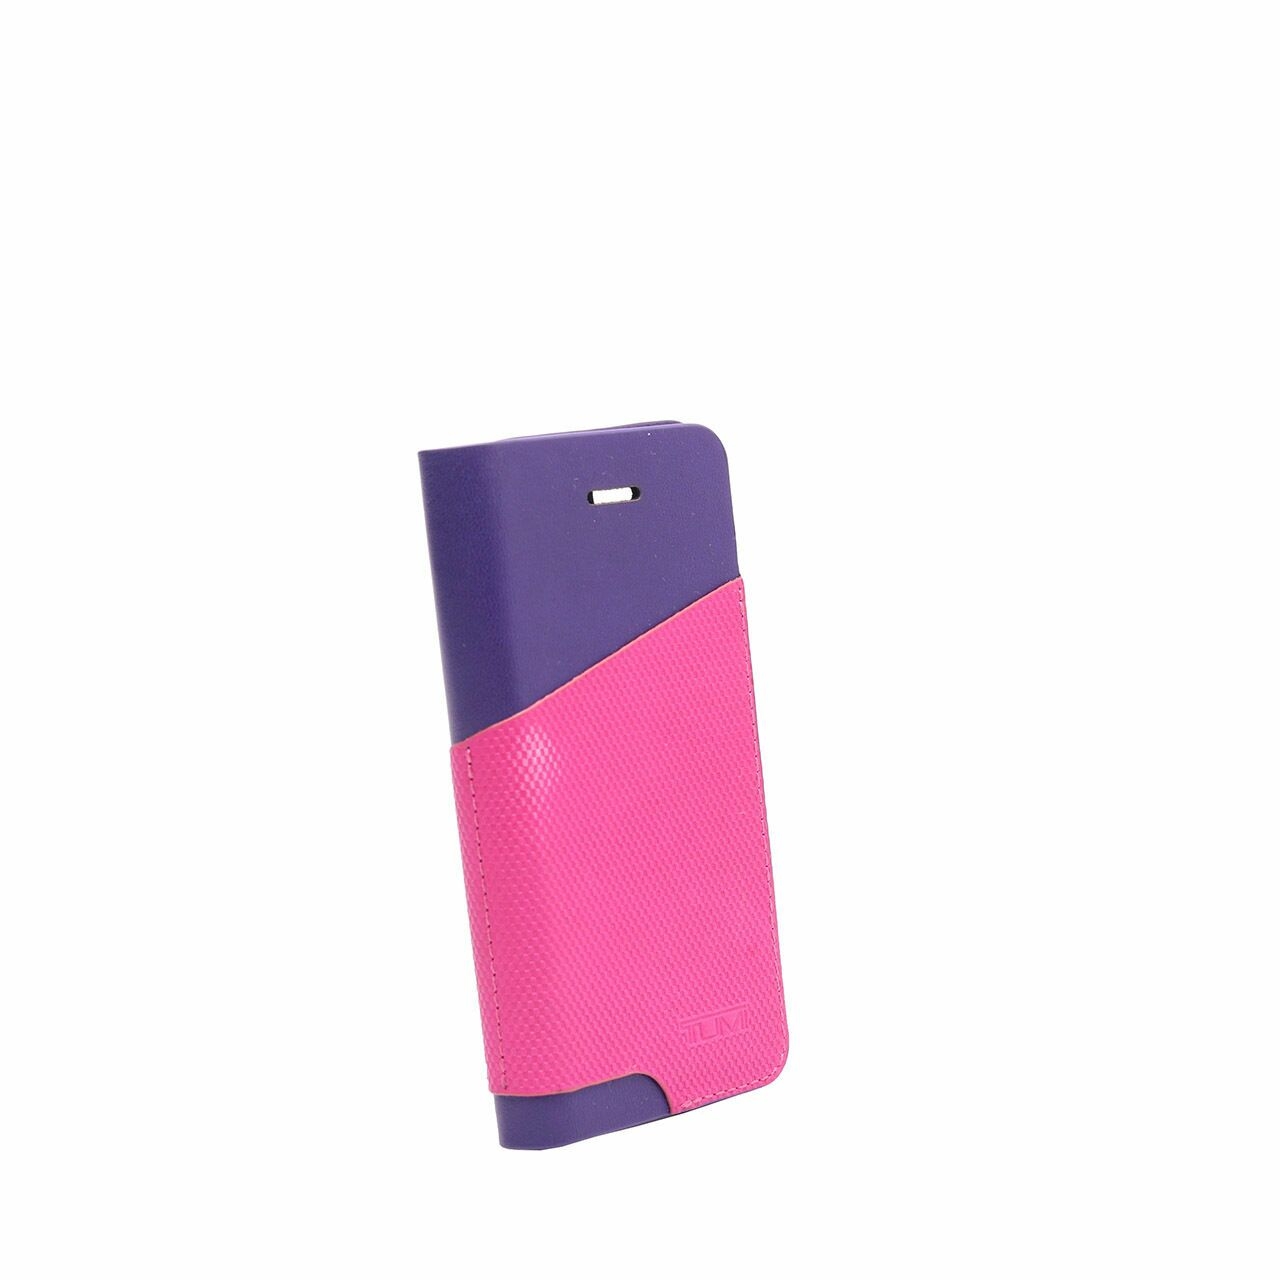 Tumi Purple & Fuchsia Cover For iPhone 5 & 5S Phone Case